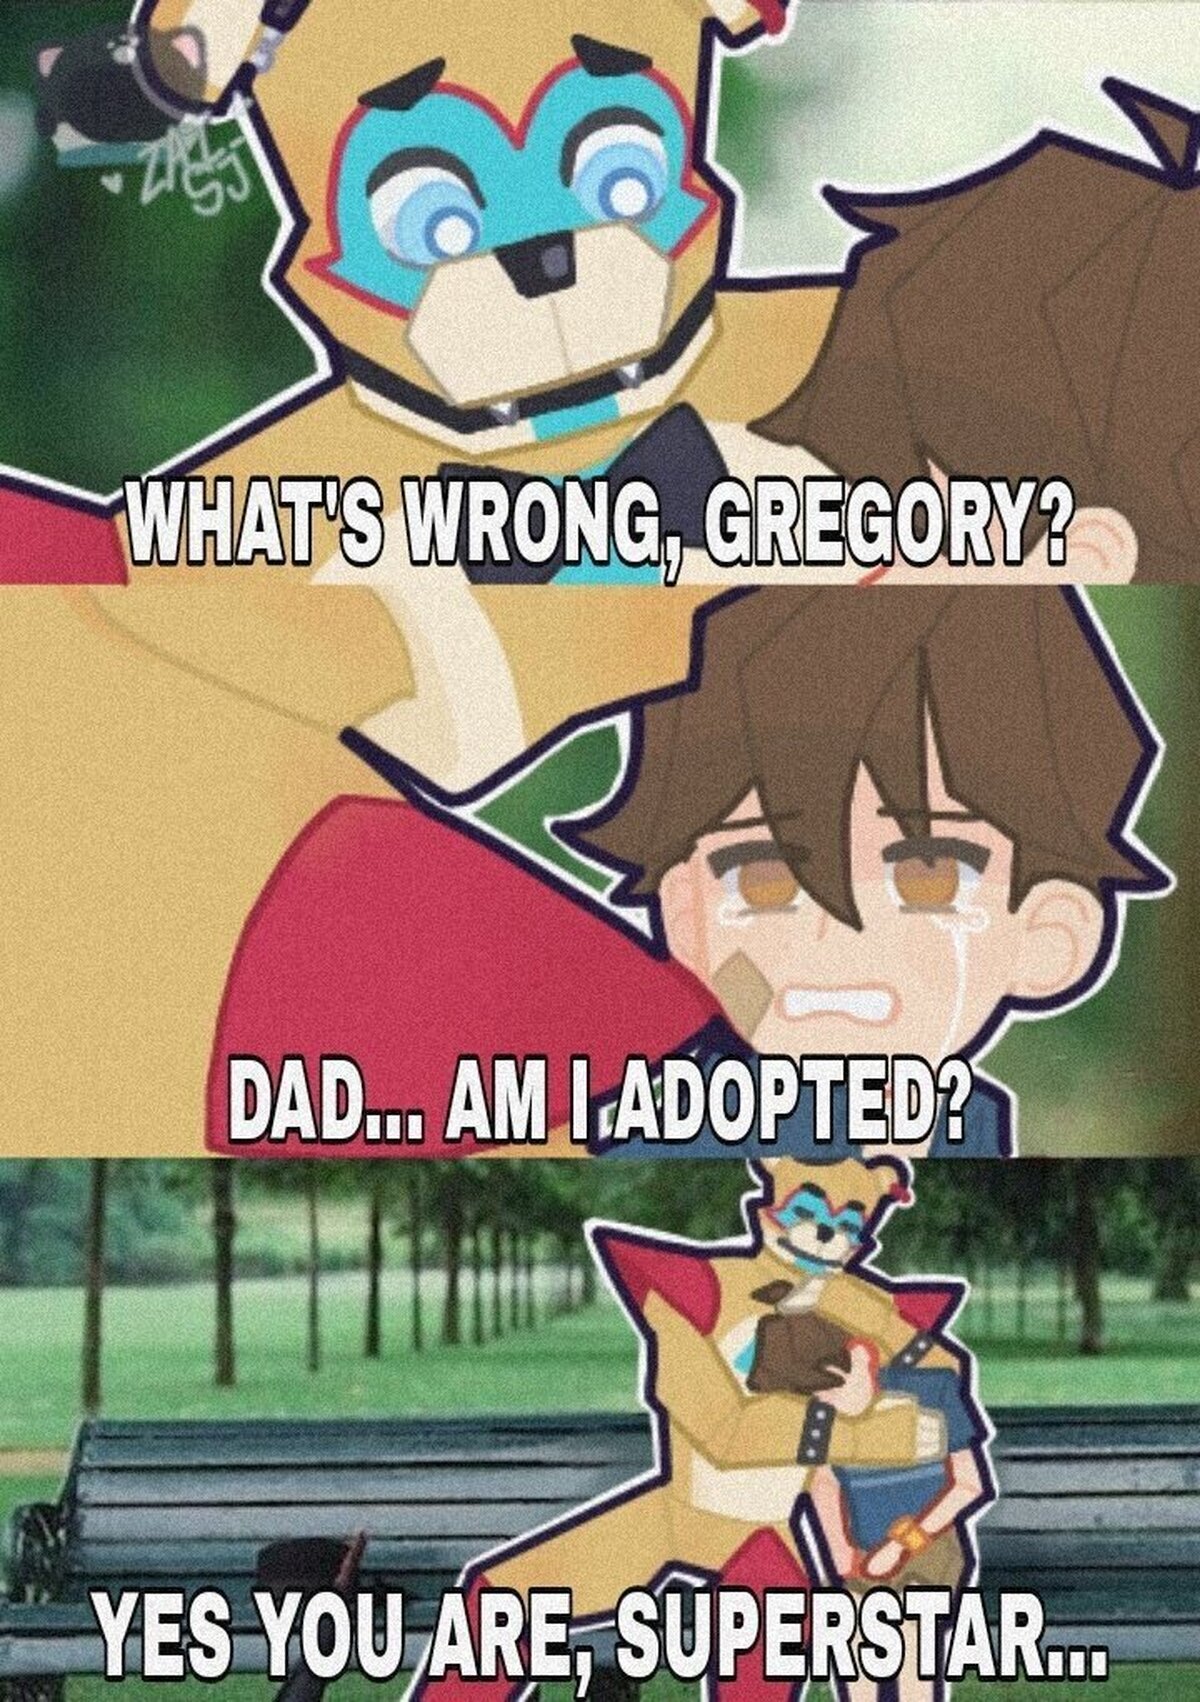 La verdad duele, Gregory